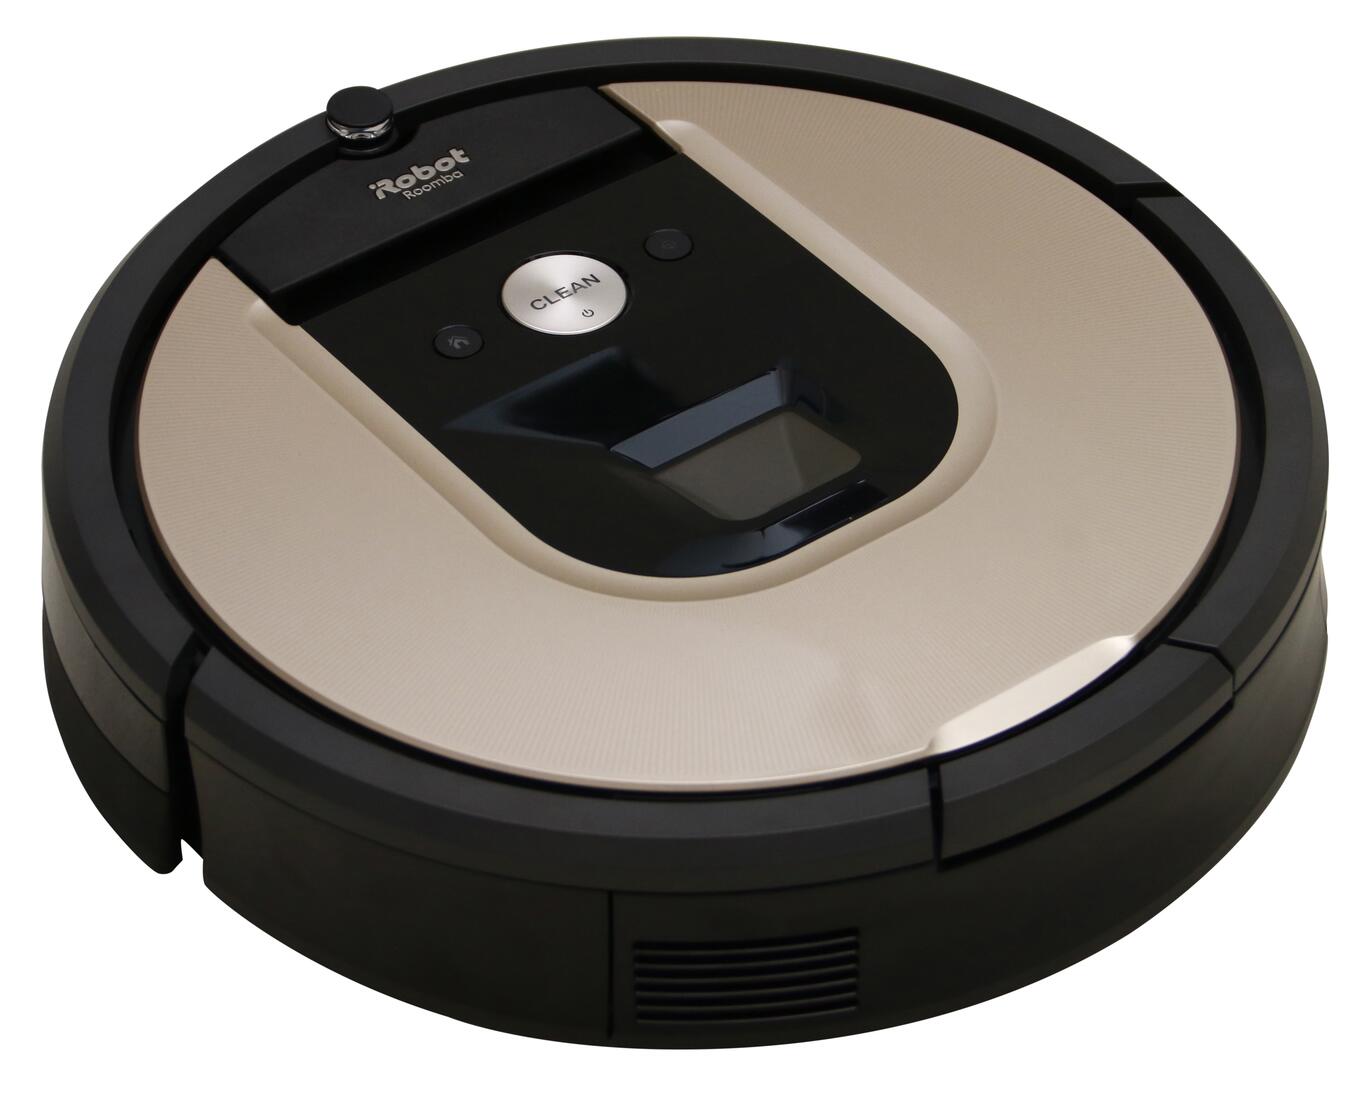 Roomba 974 iRobot